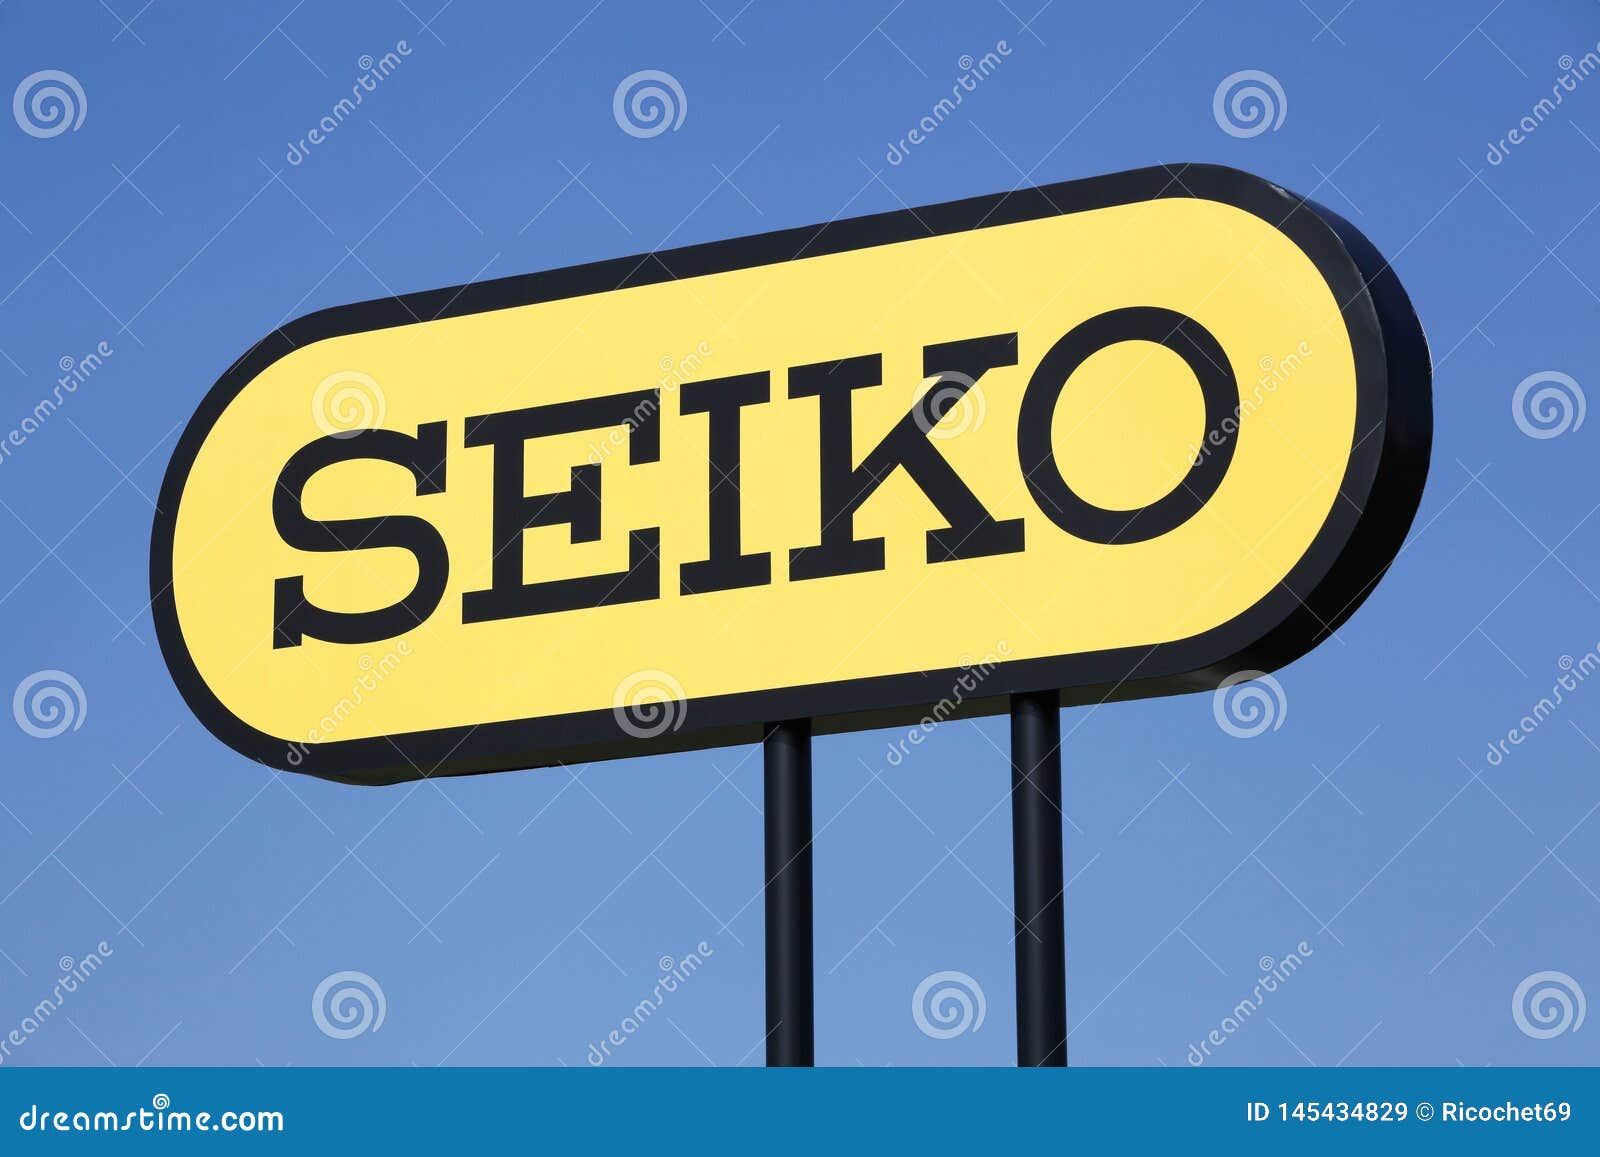 Seiko logo on a panel editorial stock image. Image of luxurious - 145434829